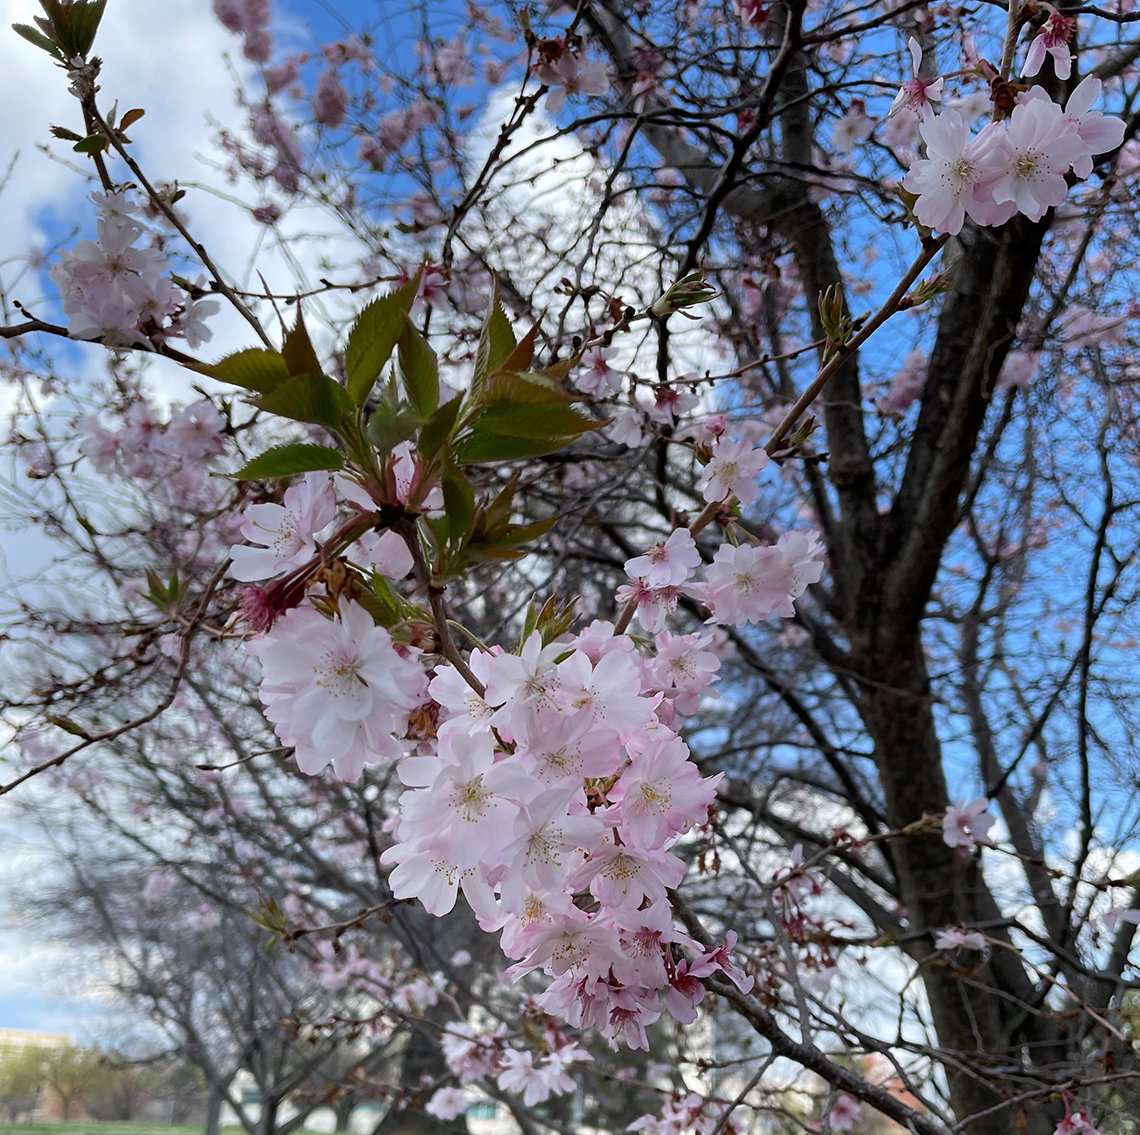 A close up view of a cherry blossom flower